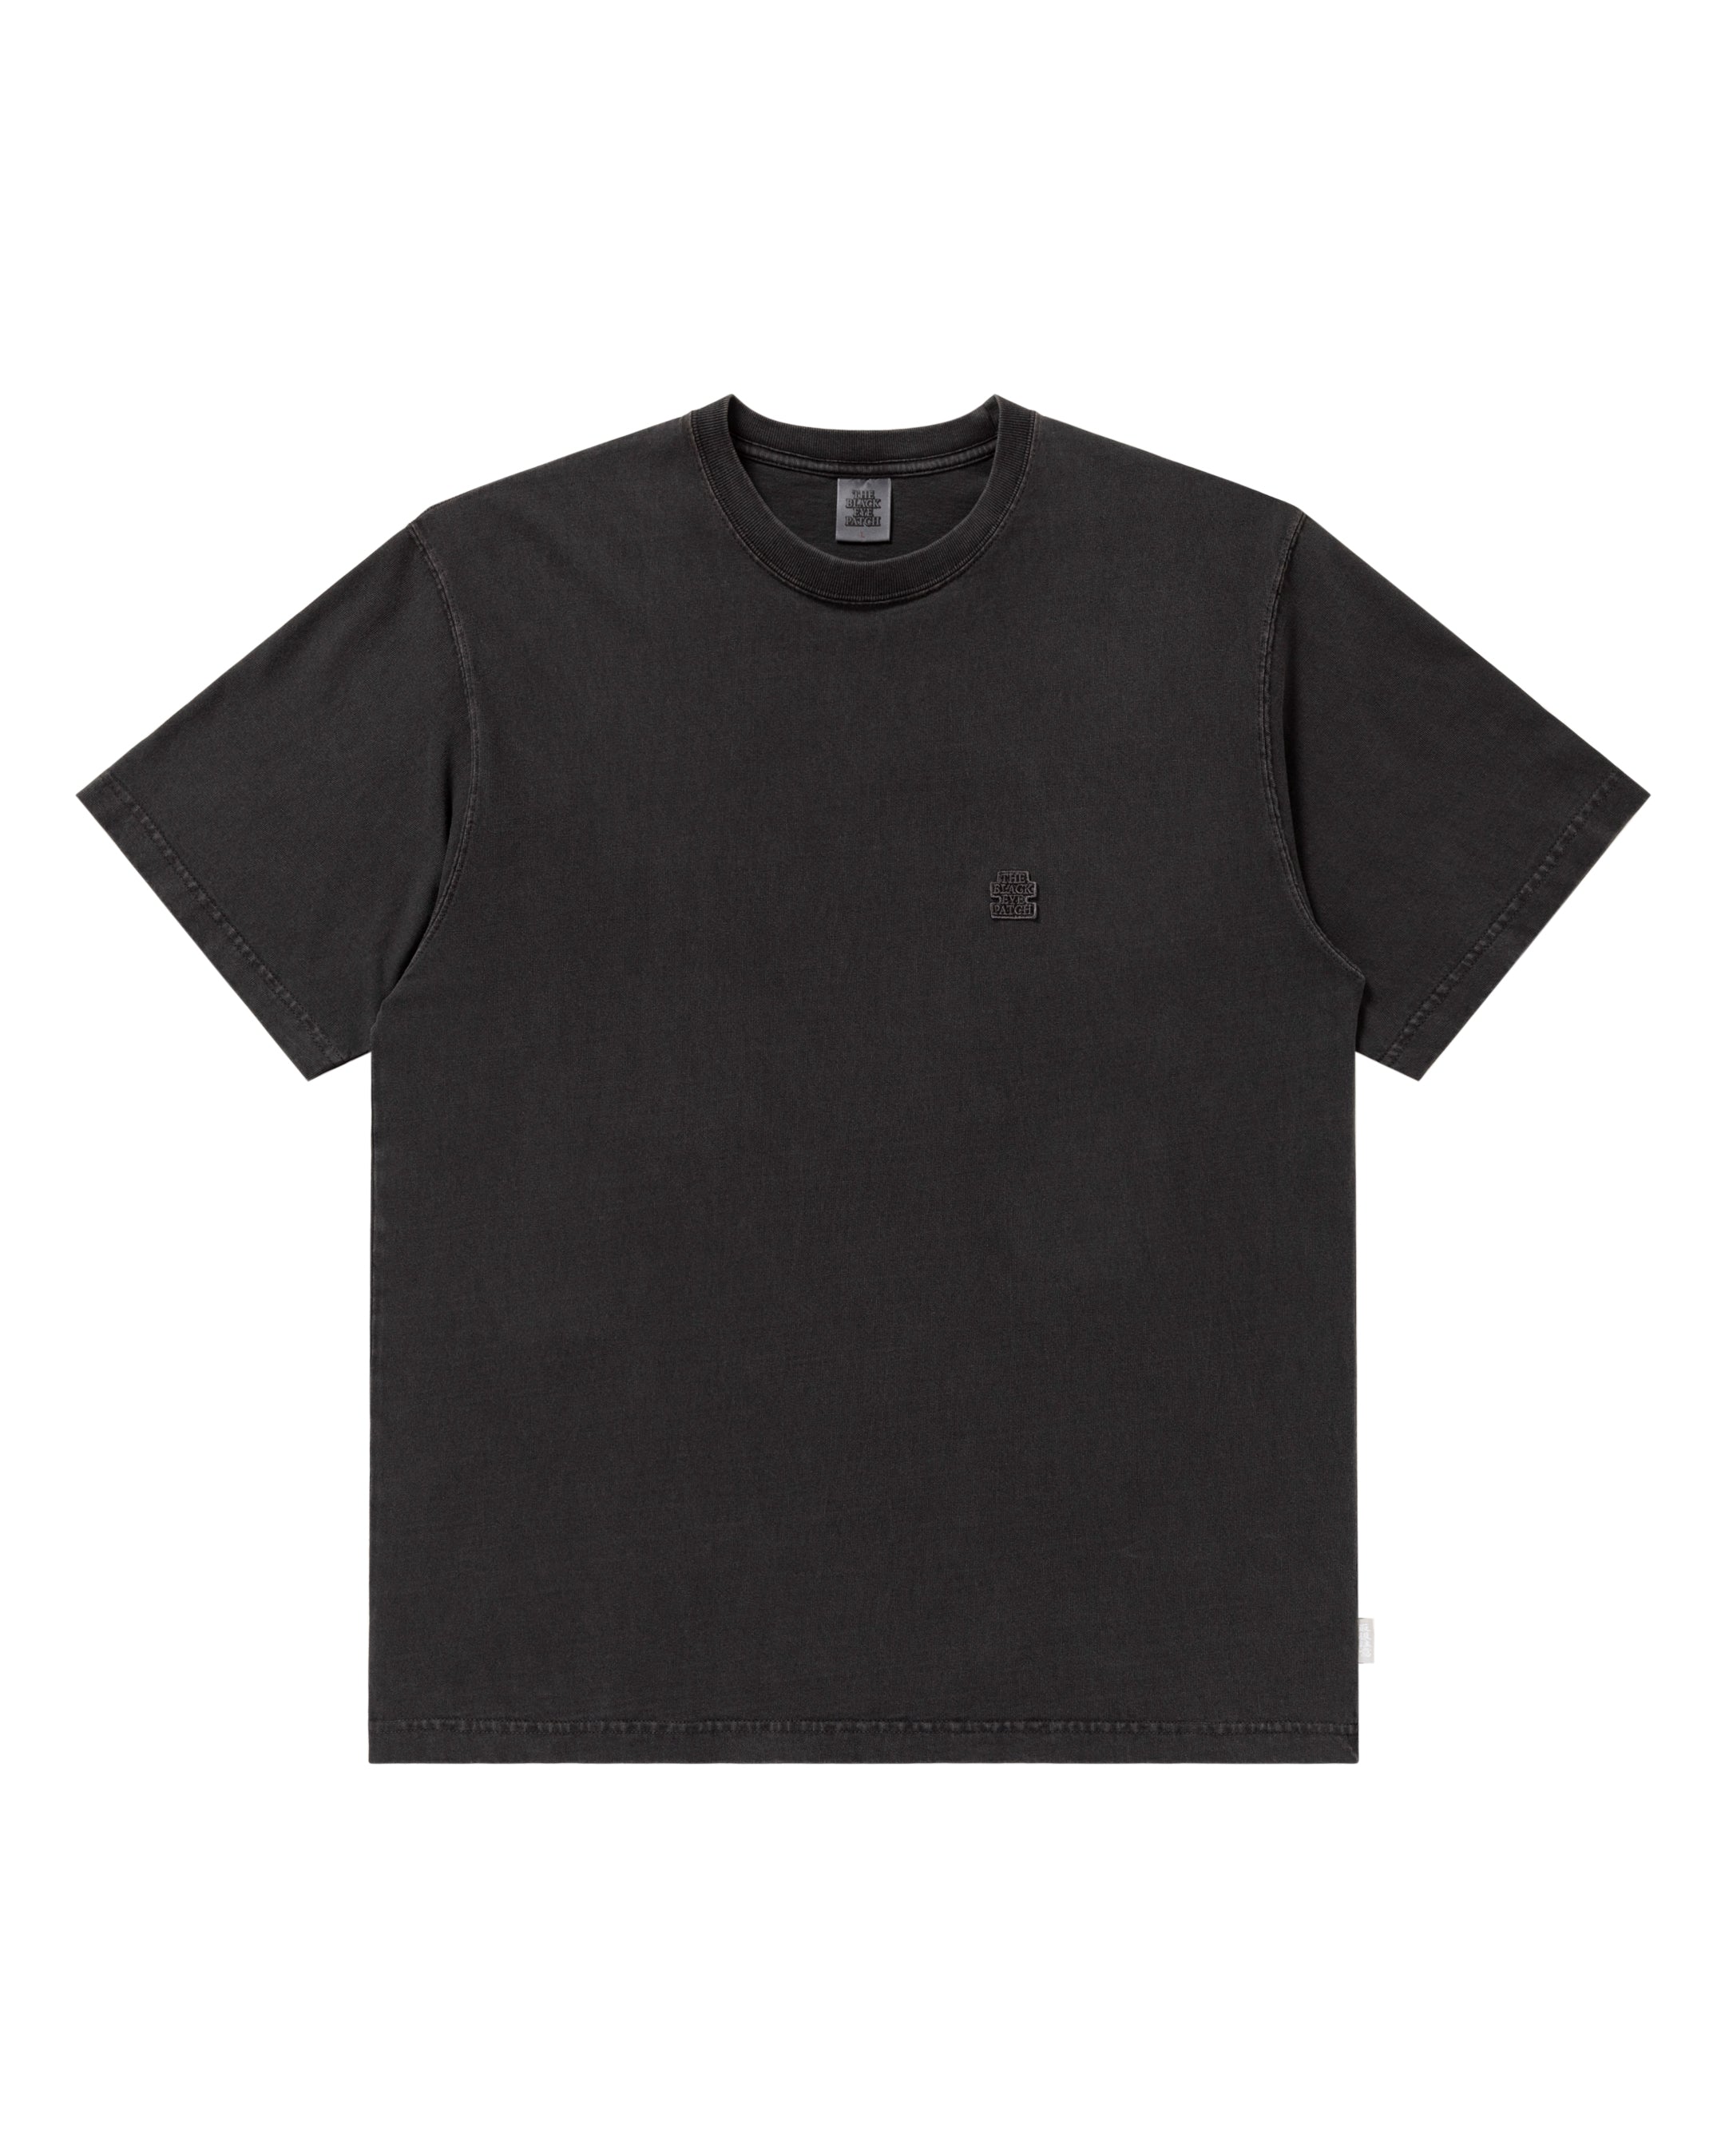 PIGMENT DYED SMALL OG LABEL TEE BLACK - Tシャツ/カットソー(半袖/袖